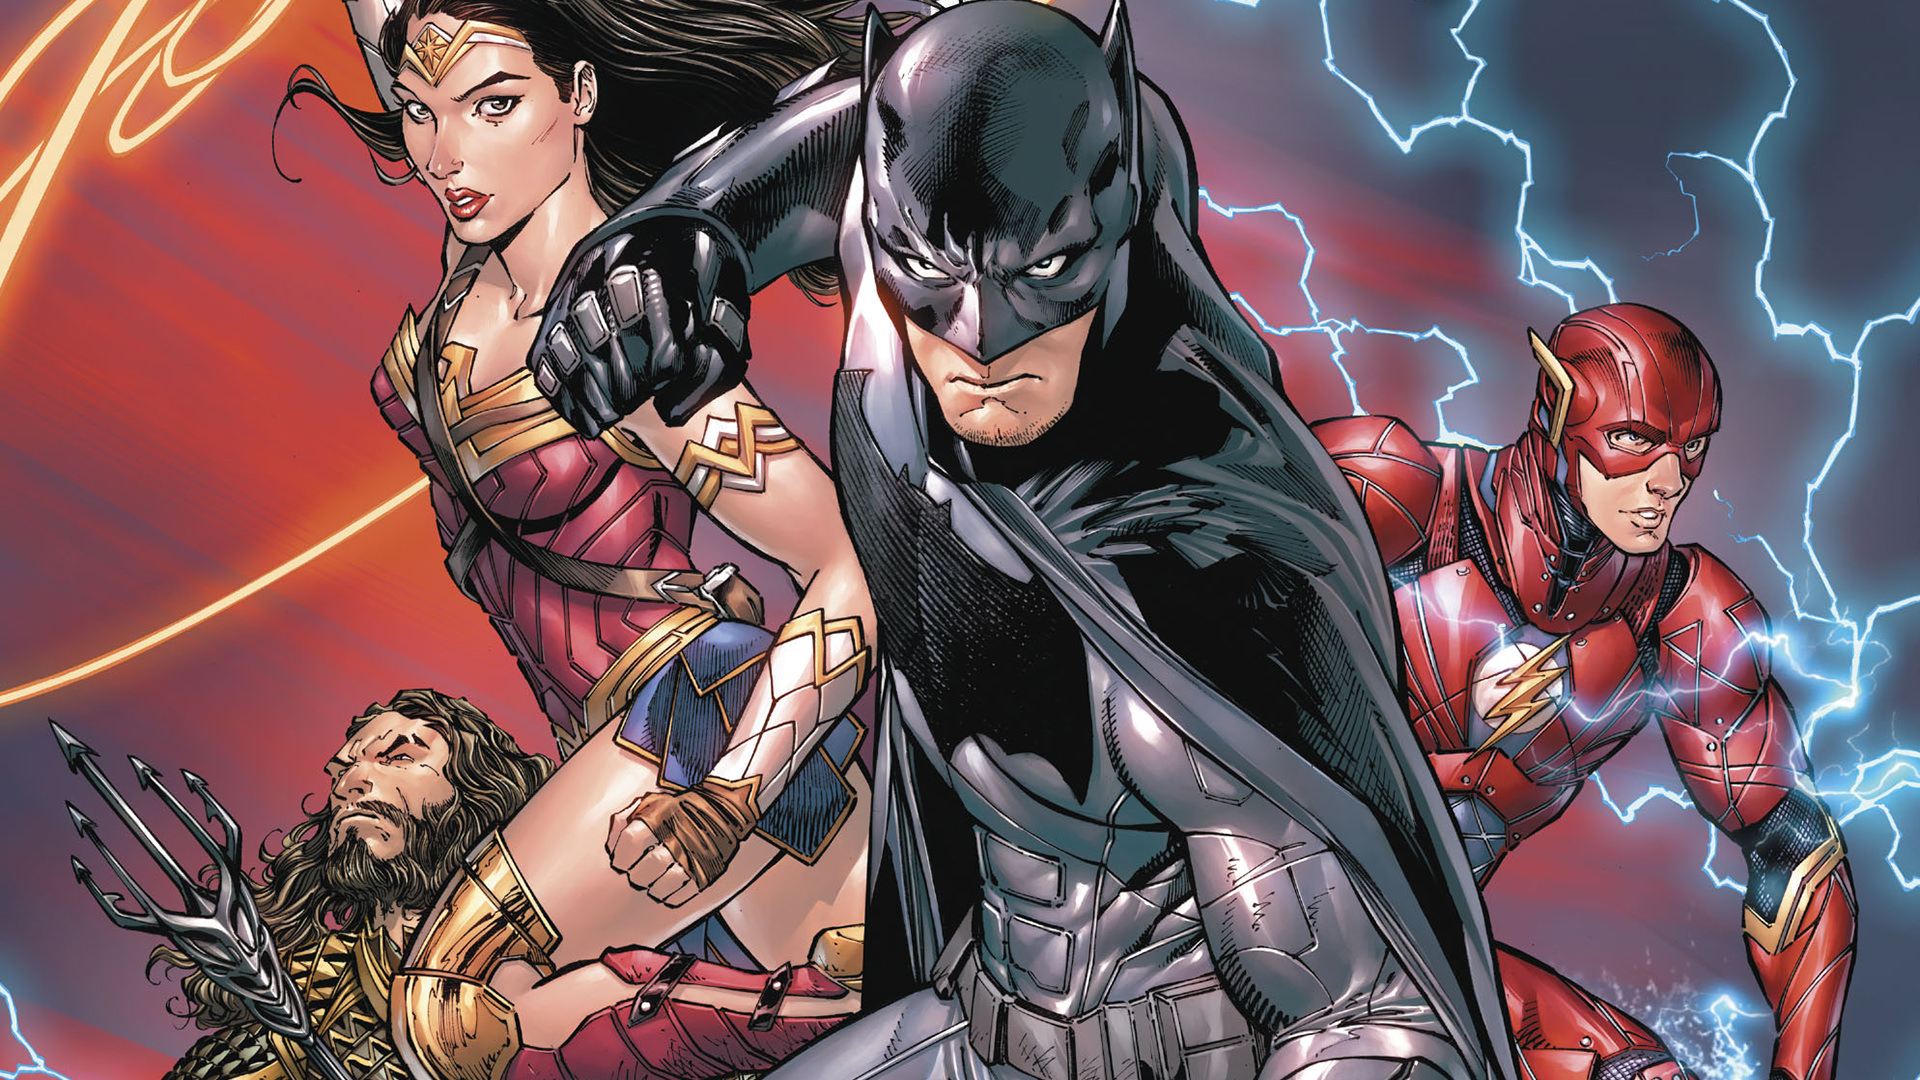 Wonder Woman Aquaman Justice League 2017 Wallpapers